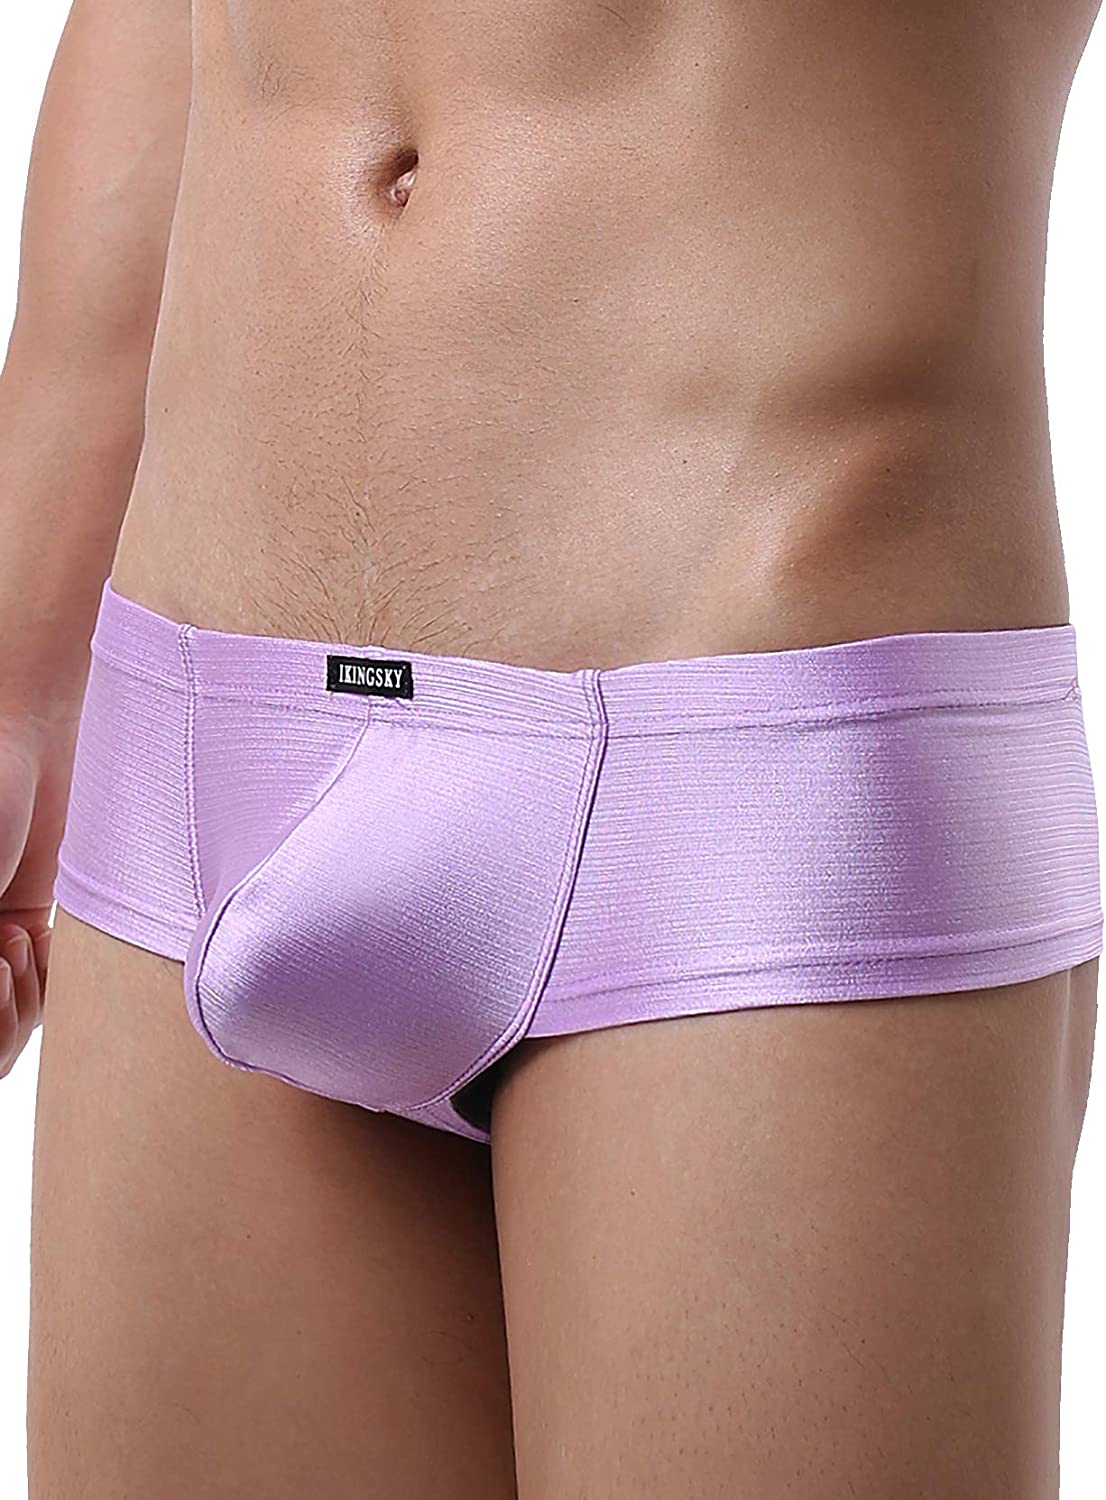 Ikingsky Mens Cheeky Thong Underwear Sexy Mini Cheek Boxer Briefs Stretch Brazi Ebay